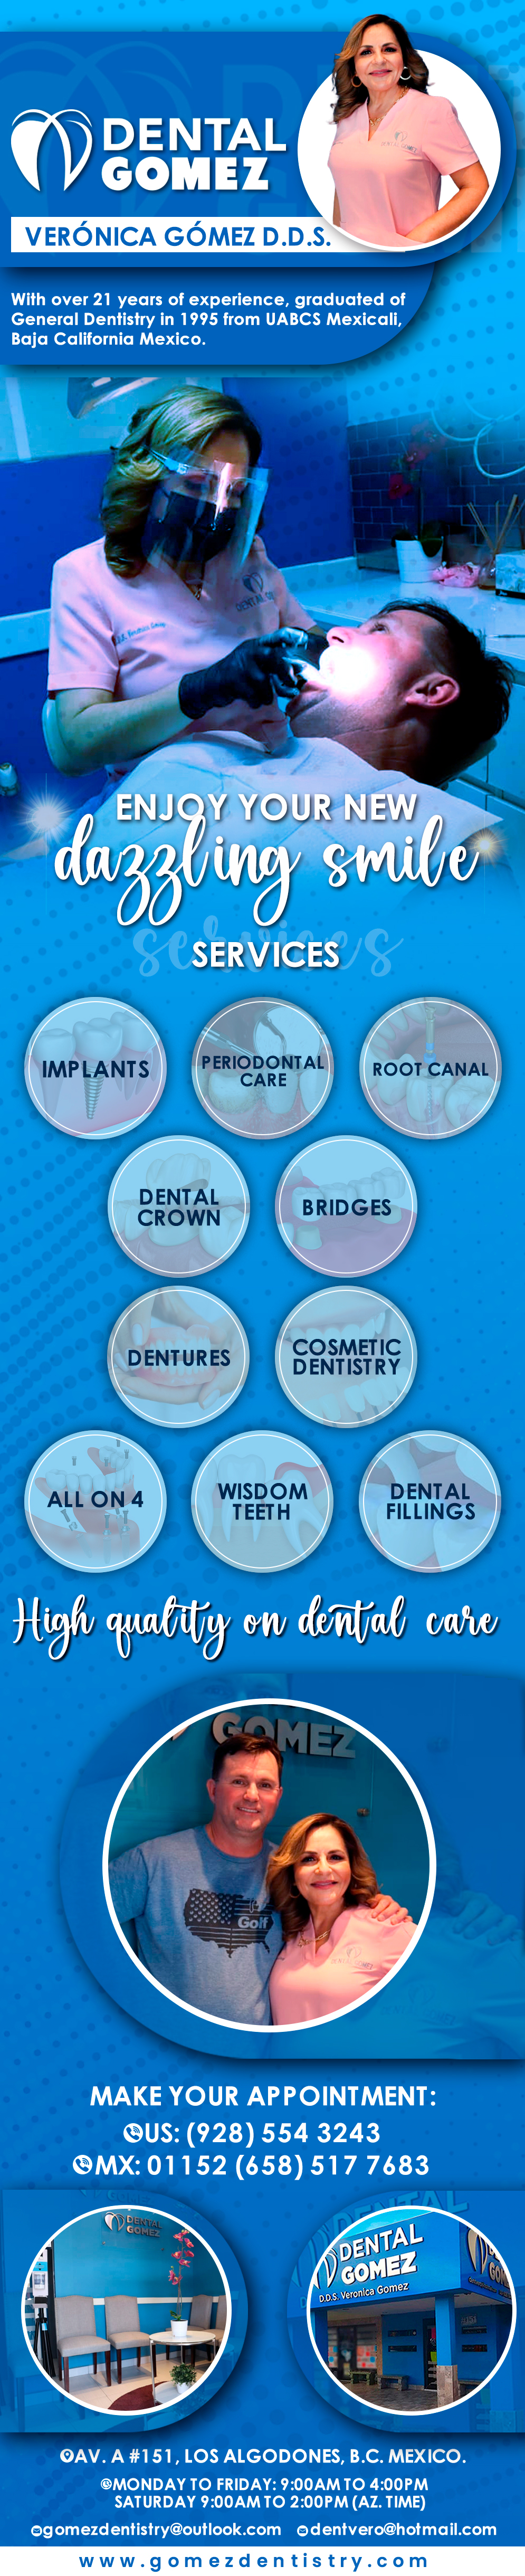 Dental Gomez Verónica Gómez D.D.S.-Veronica Gómez DDS,
SERVICES: Dental Implants, Root Canal, Periodontal Care, Cosmetic Dentistry, Crowns,
Wisdom Teeth, Dentures, All-on-4, Whitening, Bridges, Composite Fillings, Bone Graft.                            